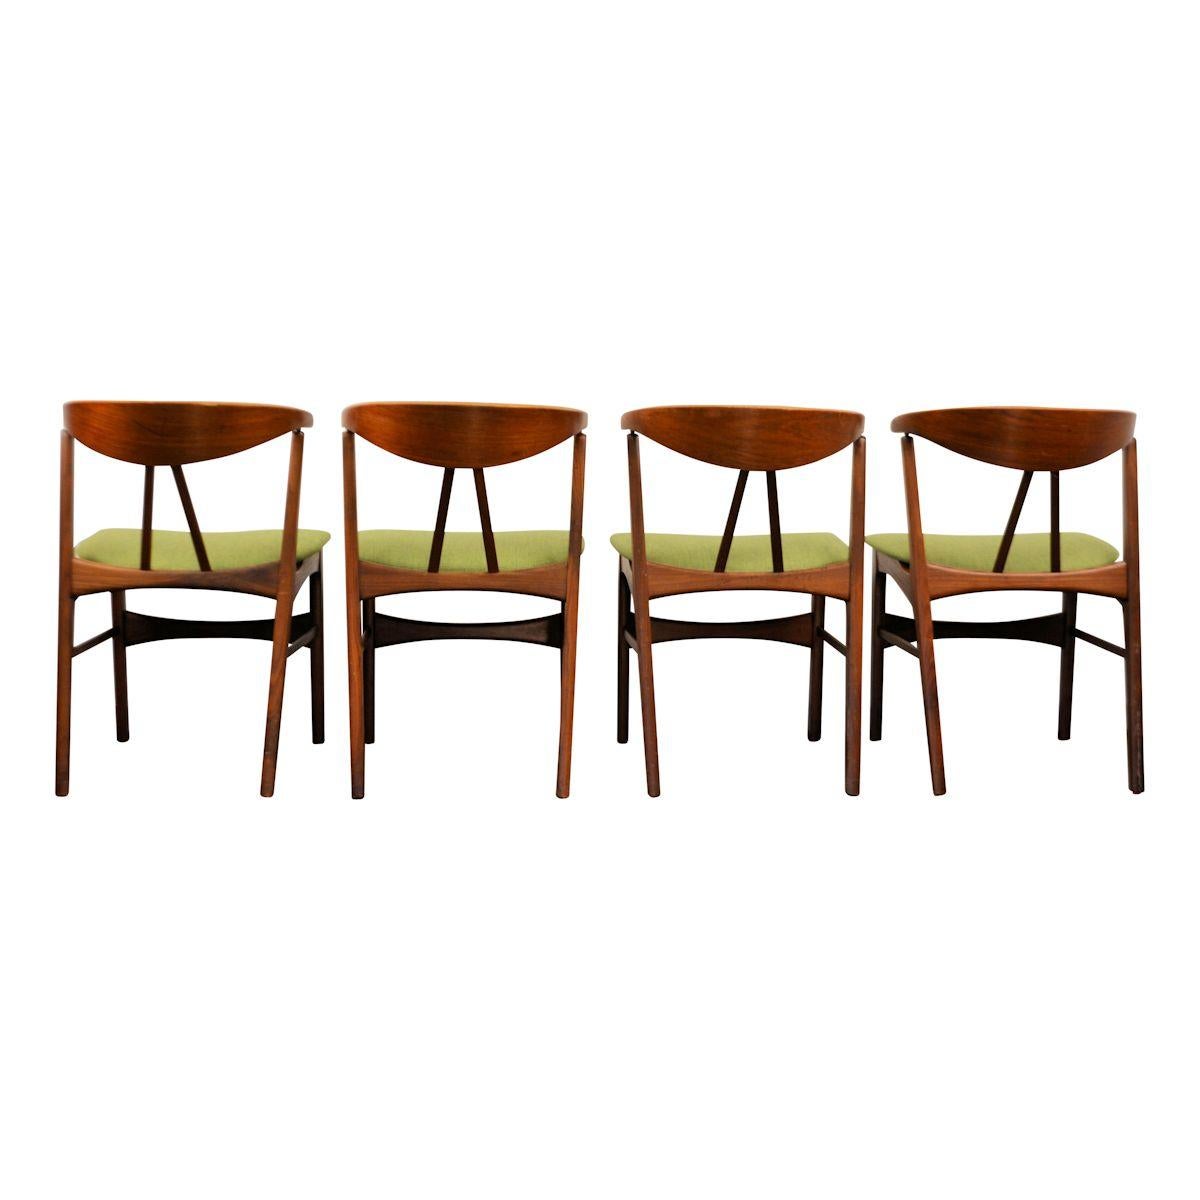 Vintage Danish Design Teak/Oak Dining Chairs, Set of 4 1